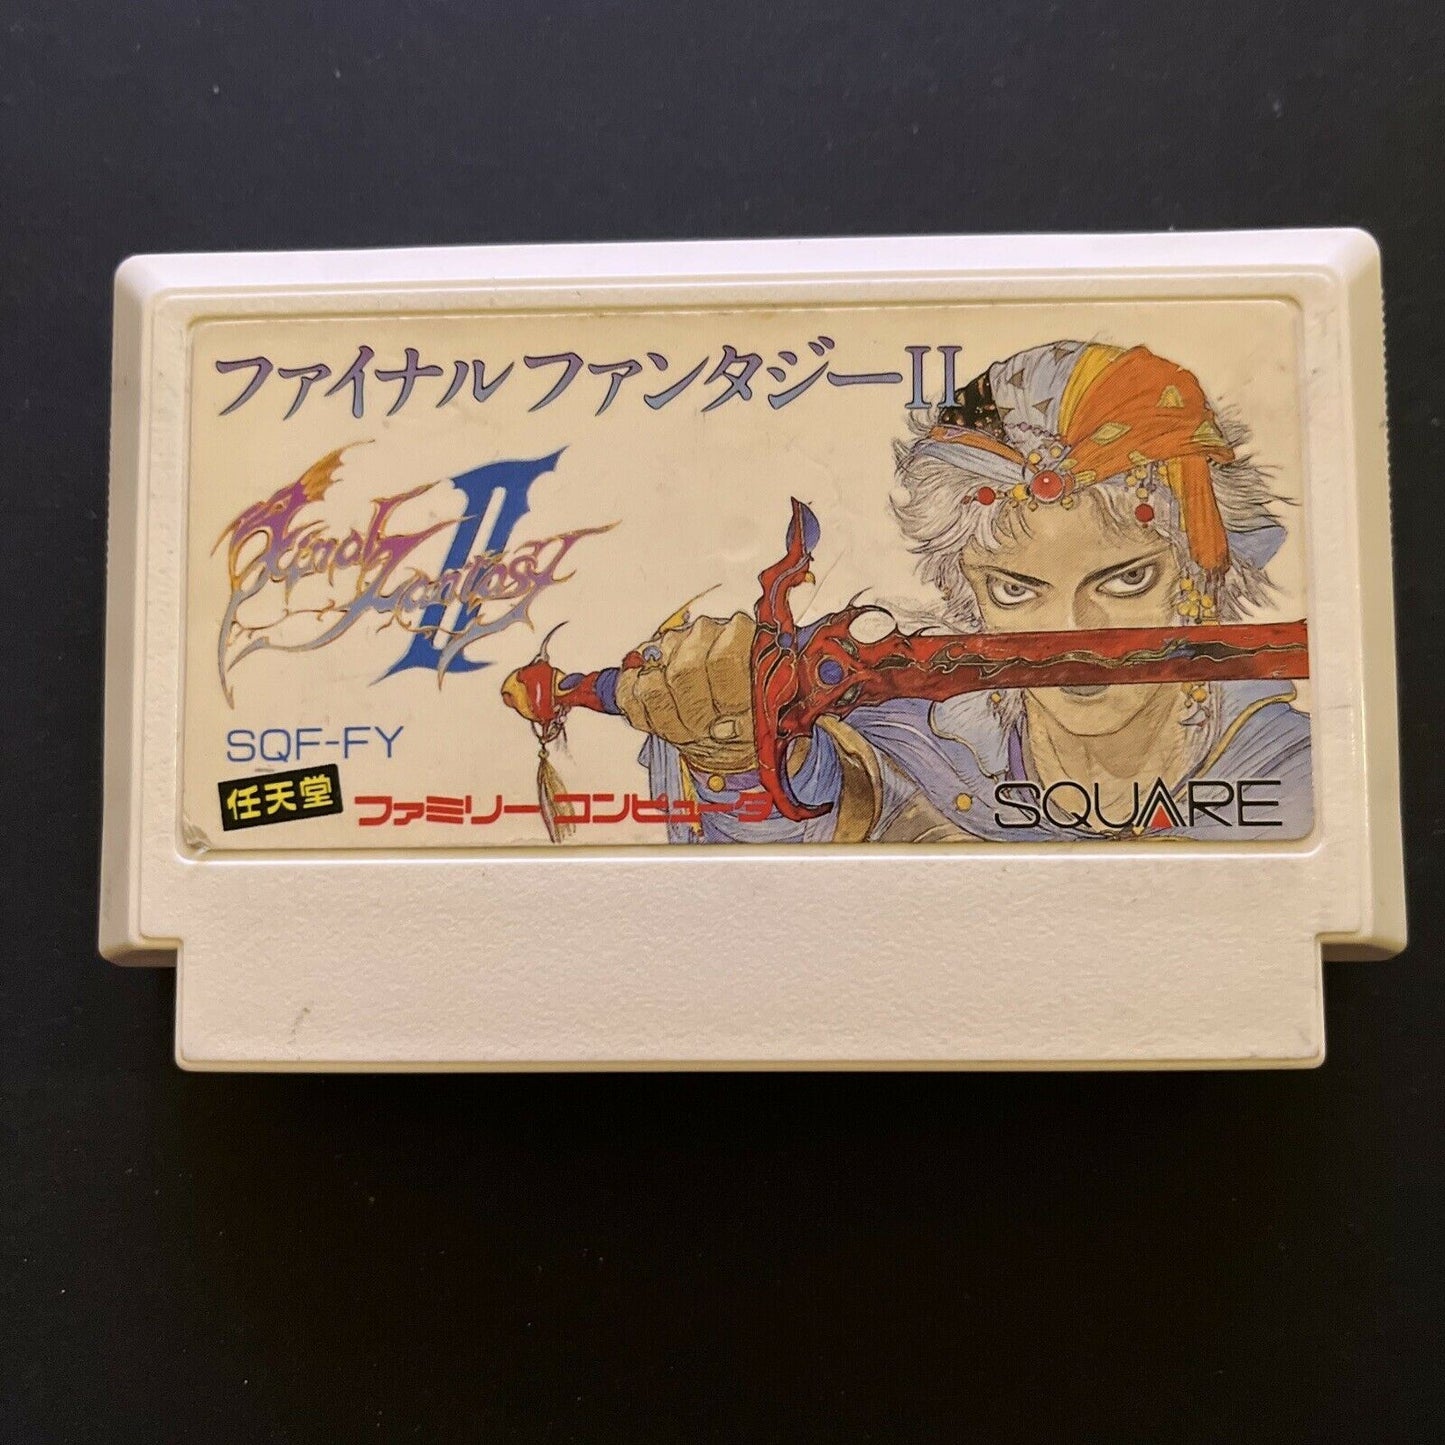 Final Fantasy 2 - Nintendo Famicom NES NTSC-J Japan SQF-FY 1988